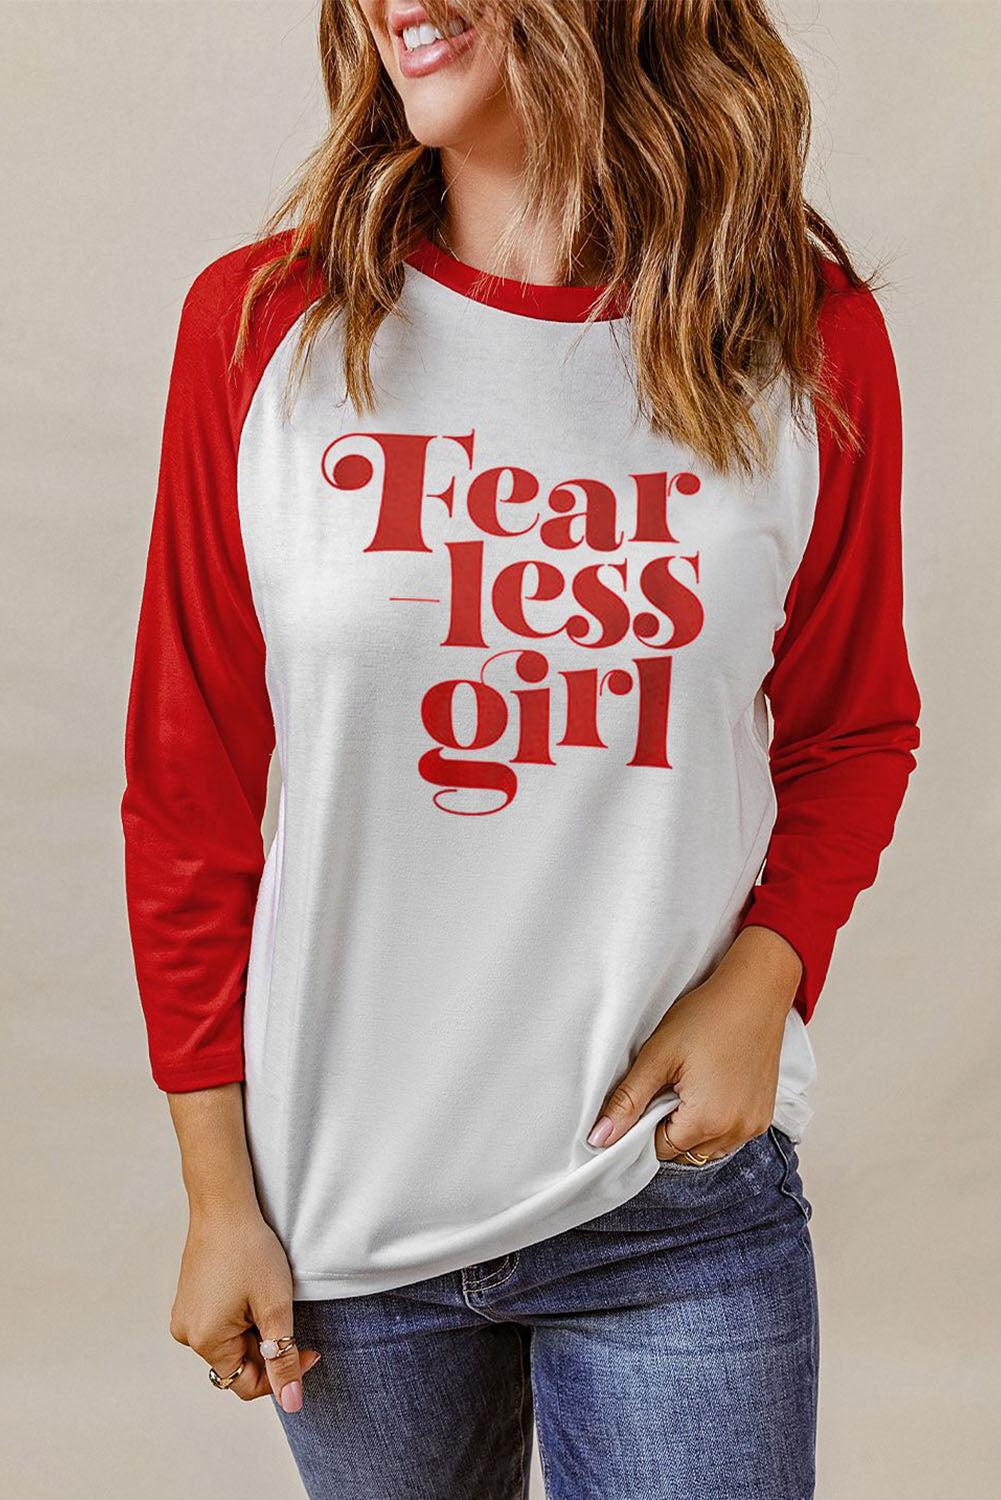 FEARLESS GIRL Graphic Raglan Sleeve Top